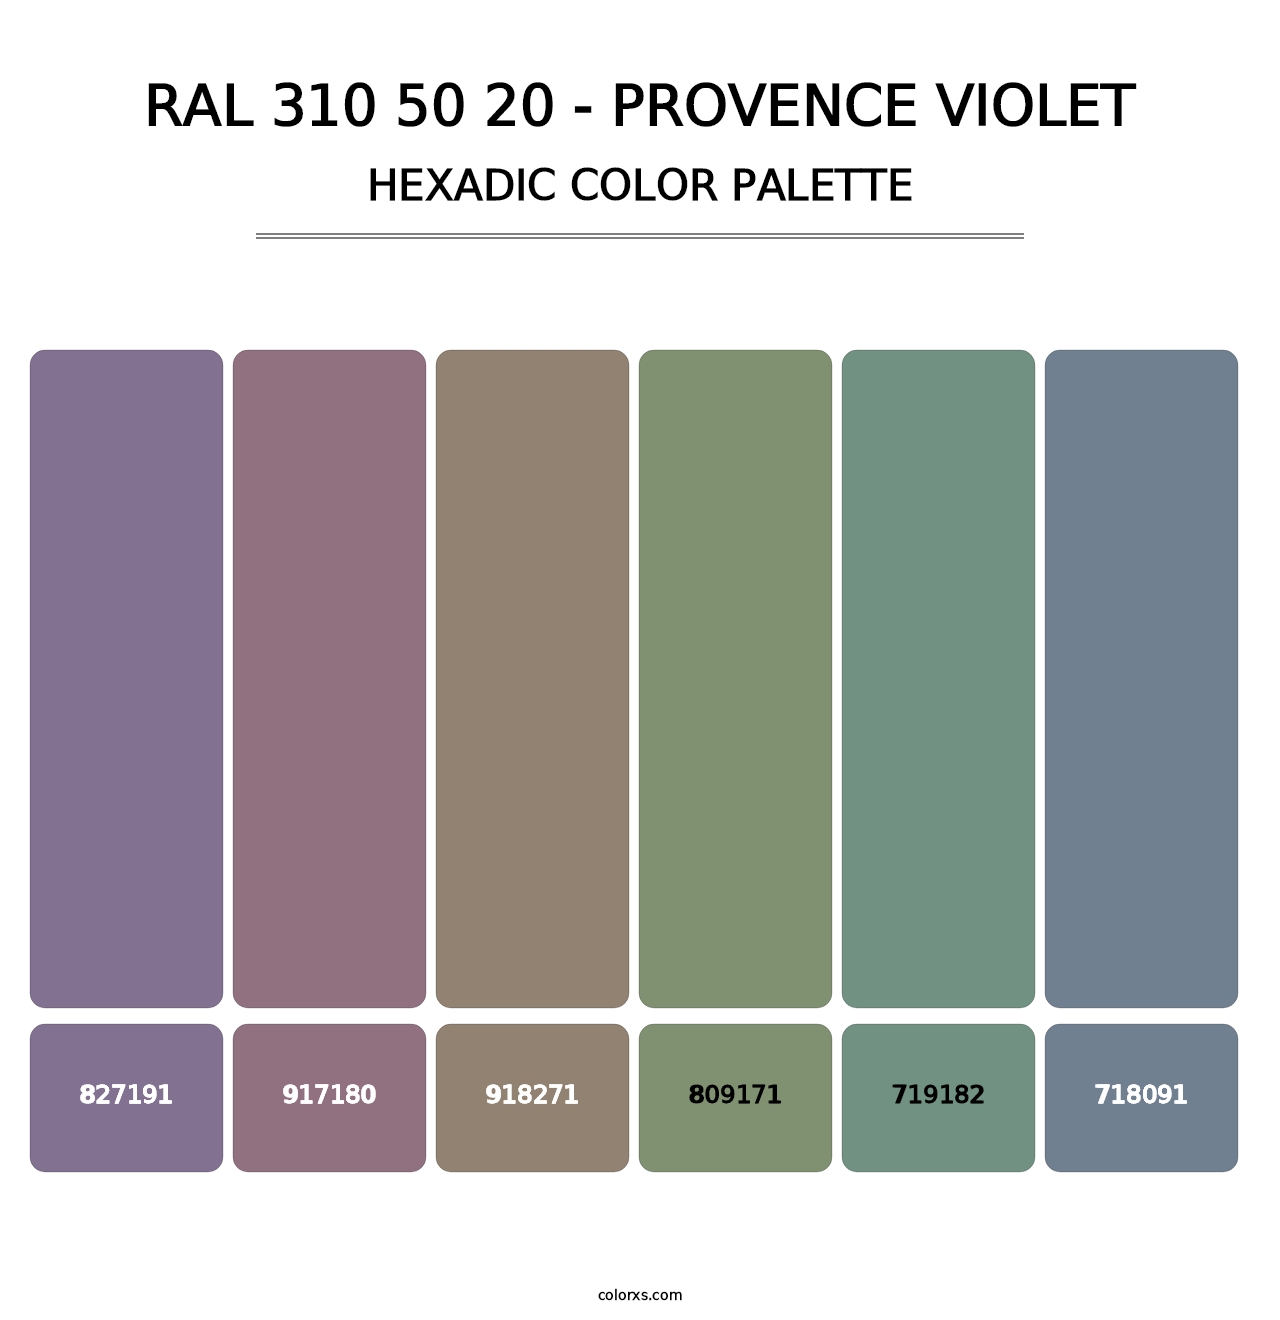 RAL 310 50 20 - Provence Violet - Hexadic Color Palette